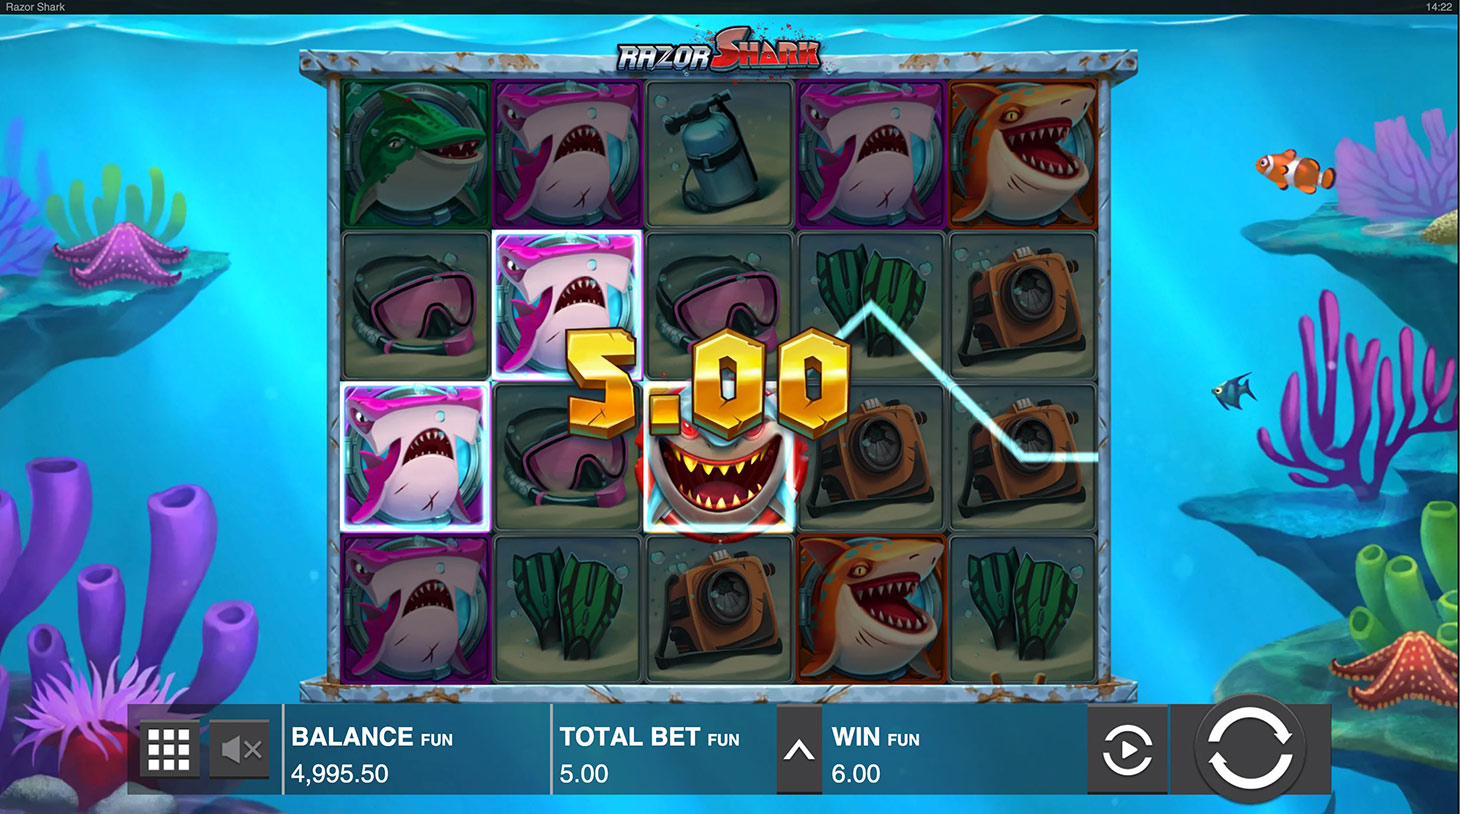 Razor Shark Spielautomaten Gewinn